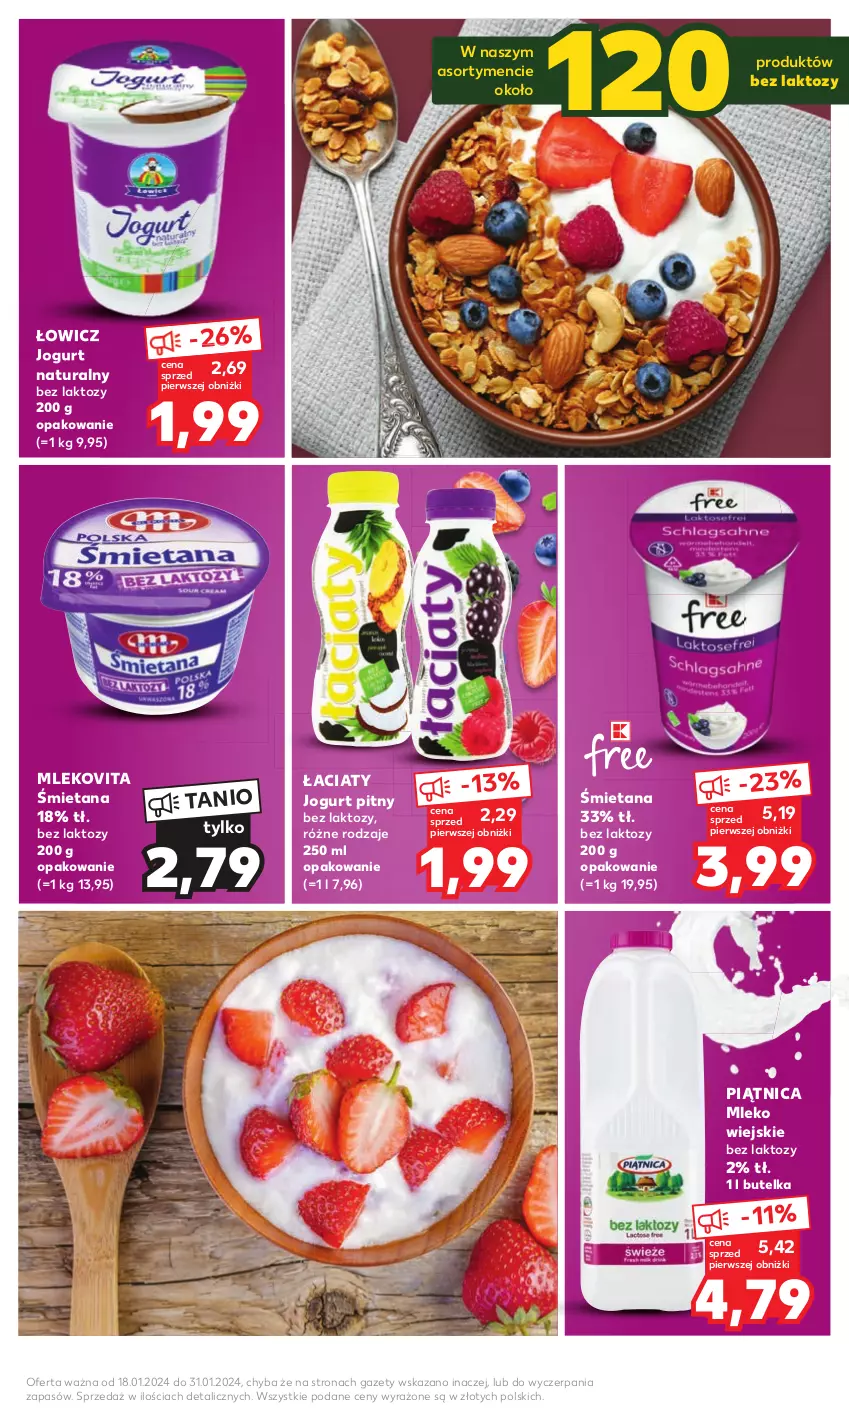 Gazetka promocyjna Kaufland - Kaufland - ważna 18.01 do 31.01.2024 - strona 15 - produkty: Jogurt, Jogurt naturalny, Jogurt pitny, Mleko, Mlekovita, Piątnica